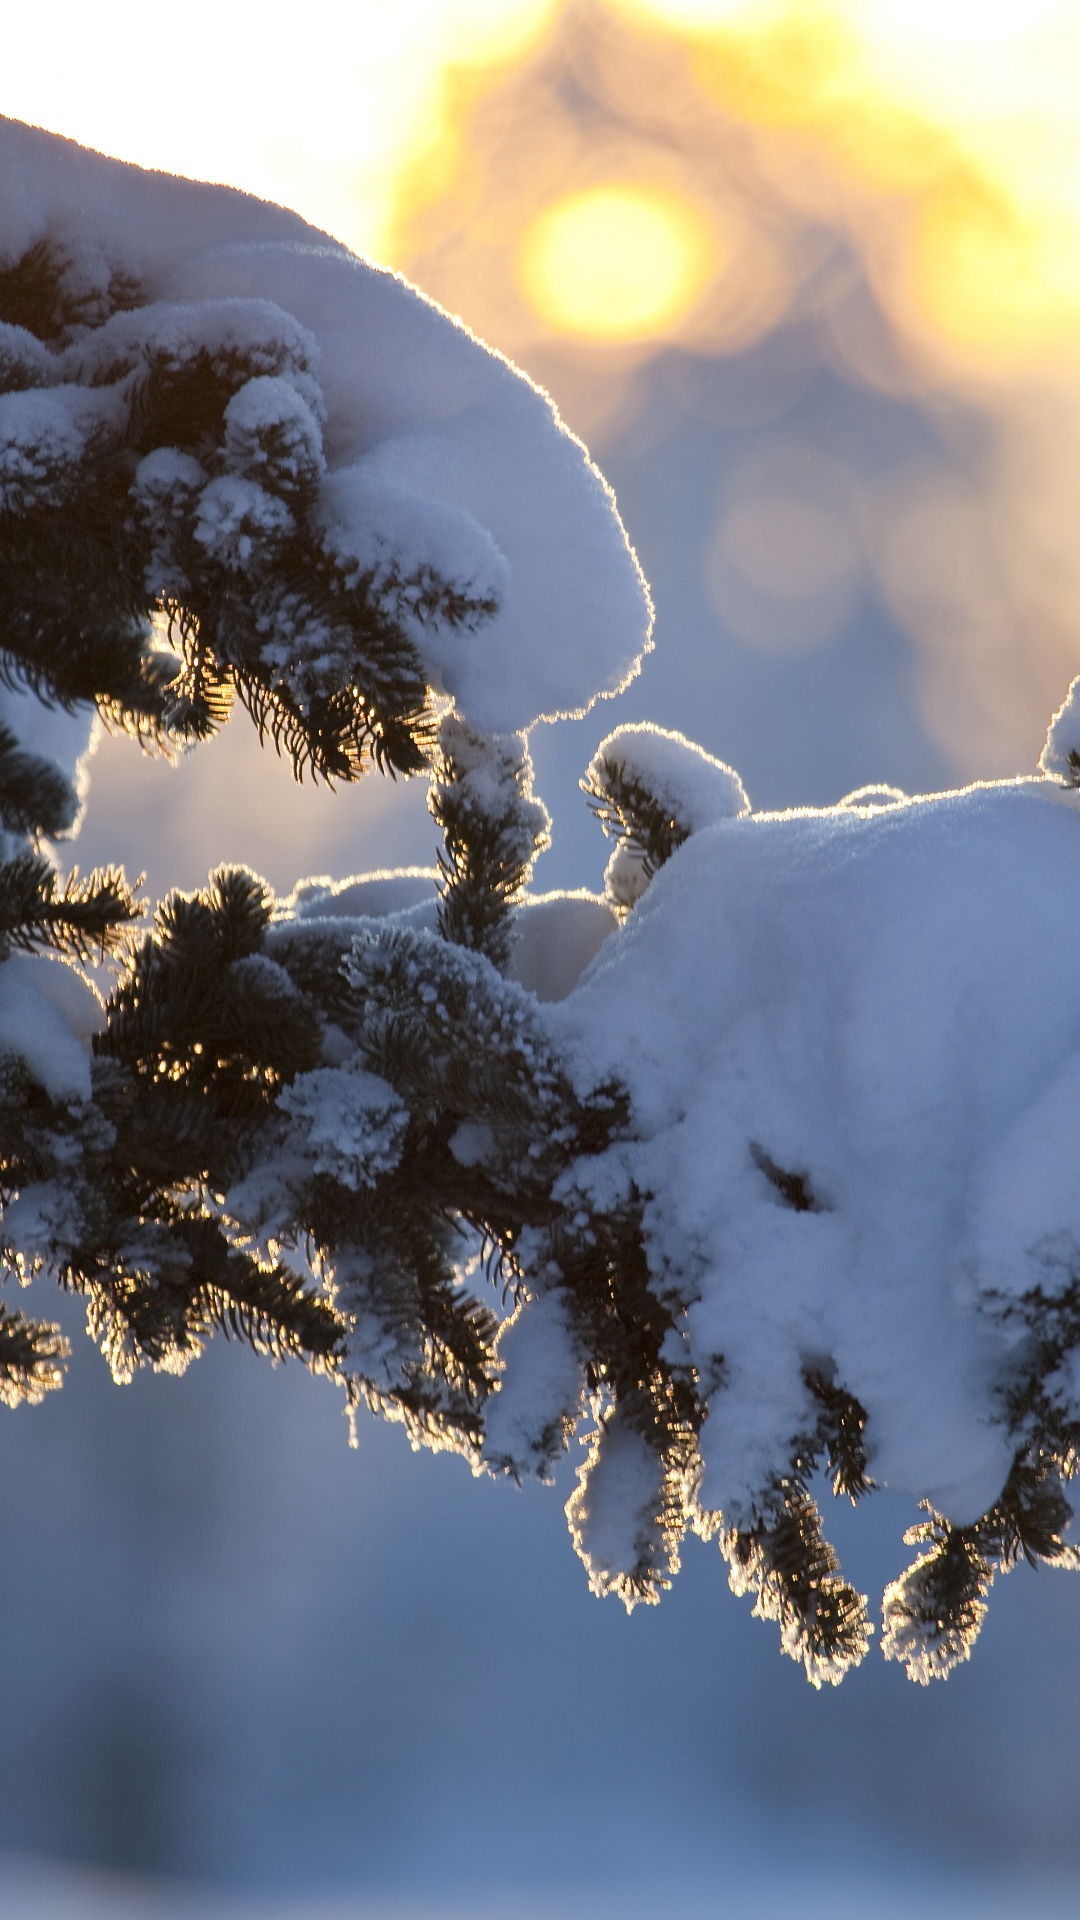 White Bird on Brown Tree Branch During Daytime. Wallpaper in 1080x1920 Resolution